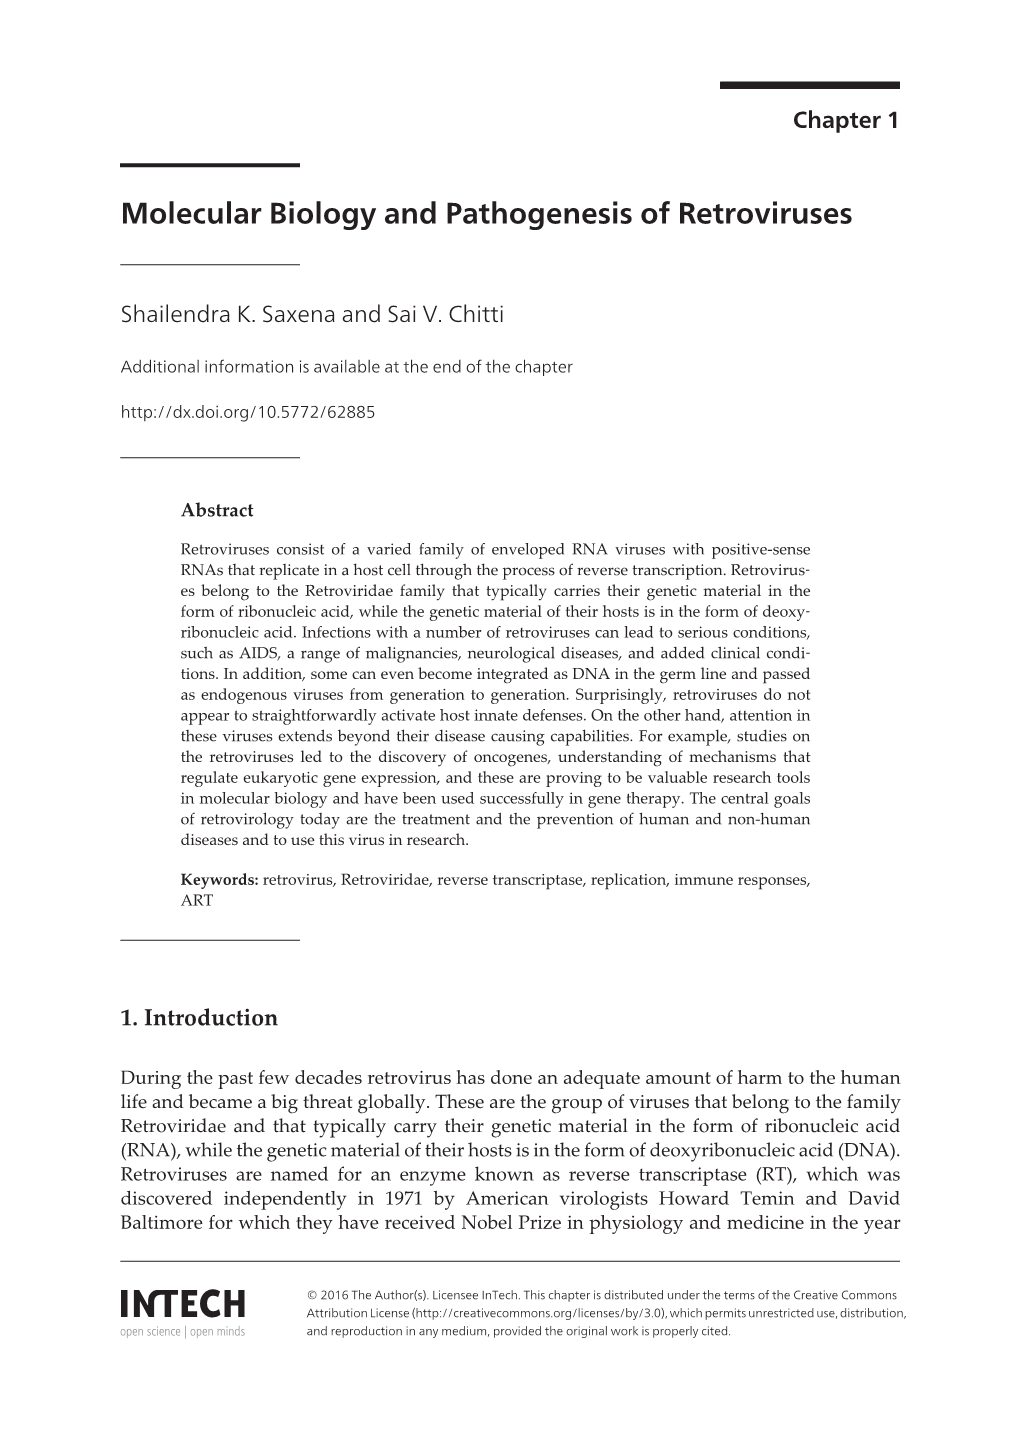 Molecular Biology and Pathogenesis of Retroviruses